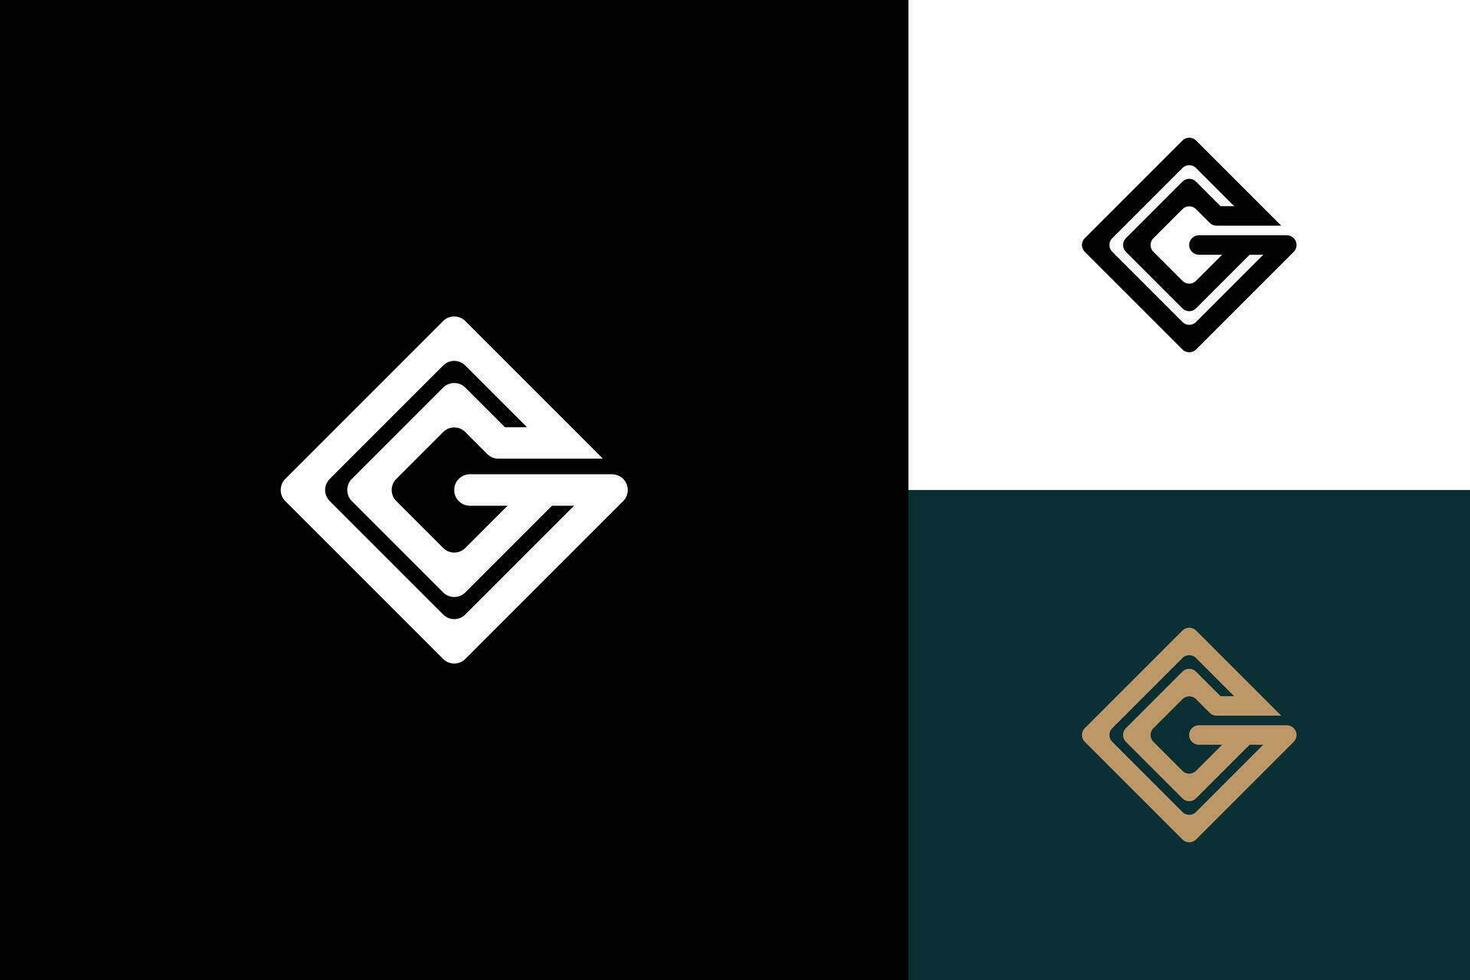 brev g monogram vektor logotyp design